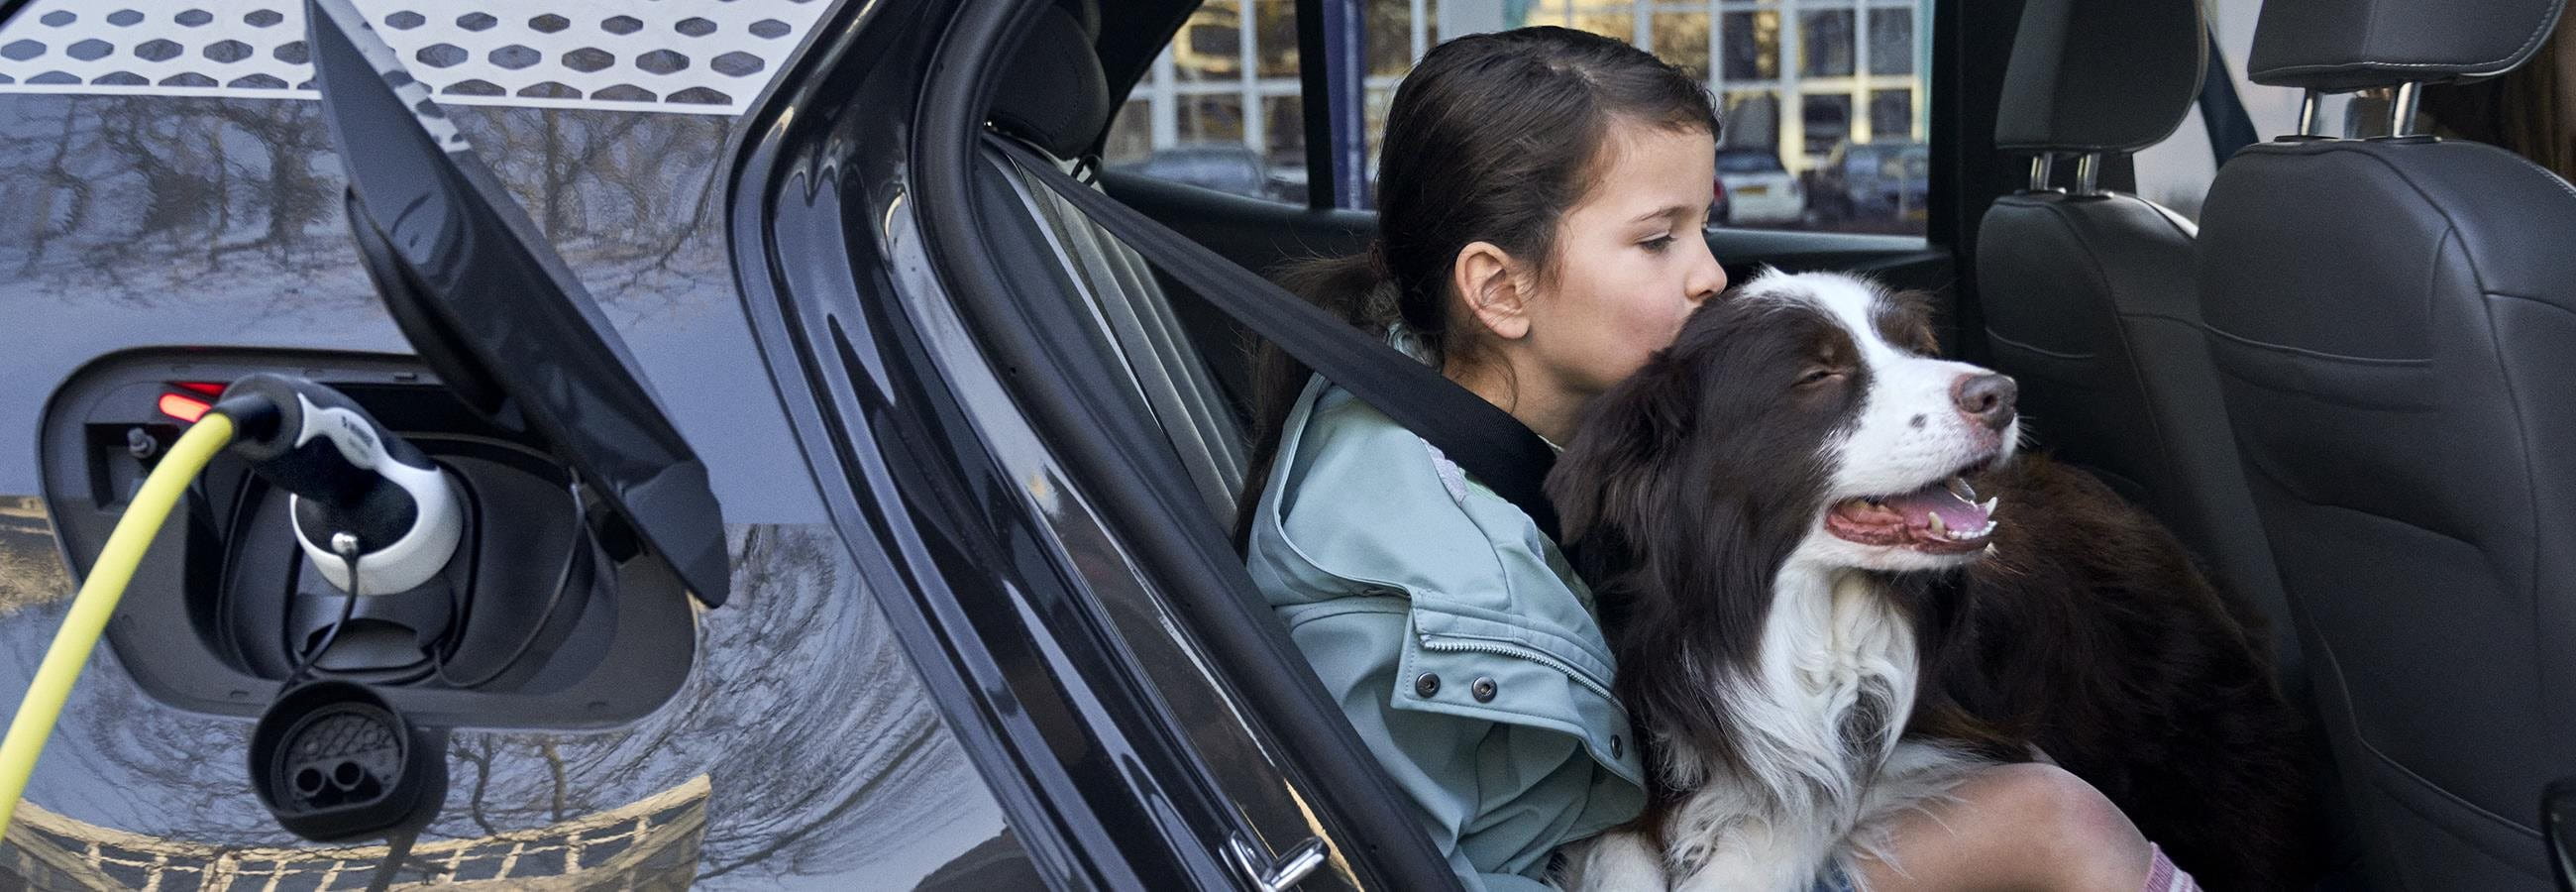 Girl cuddles a dog in the car